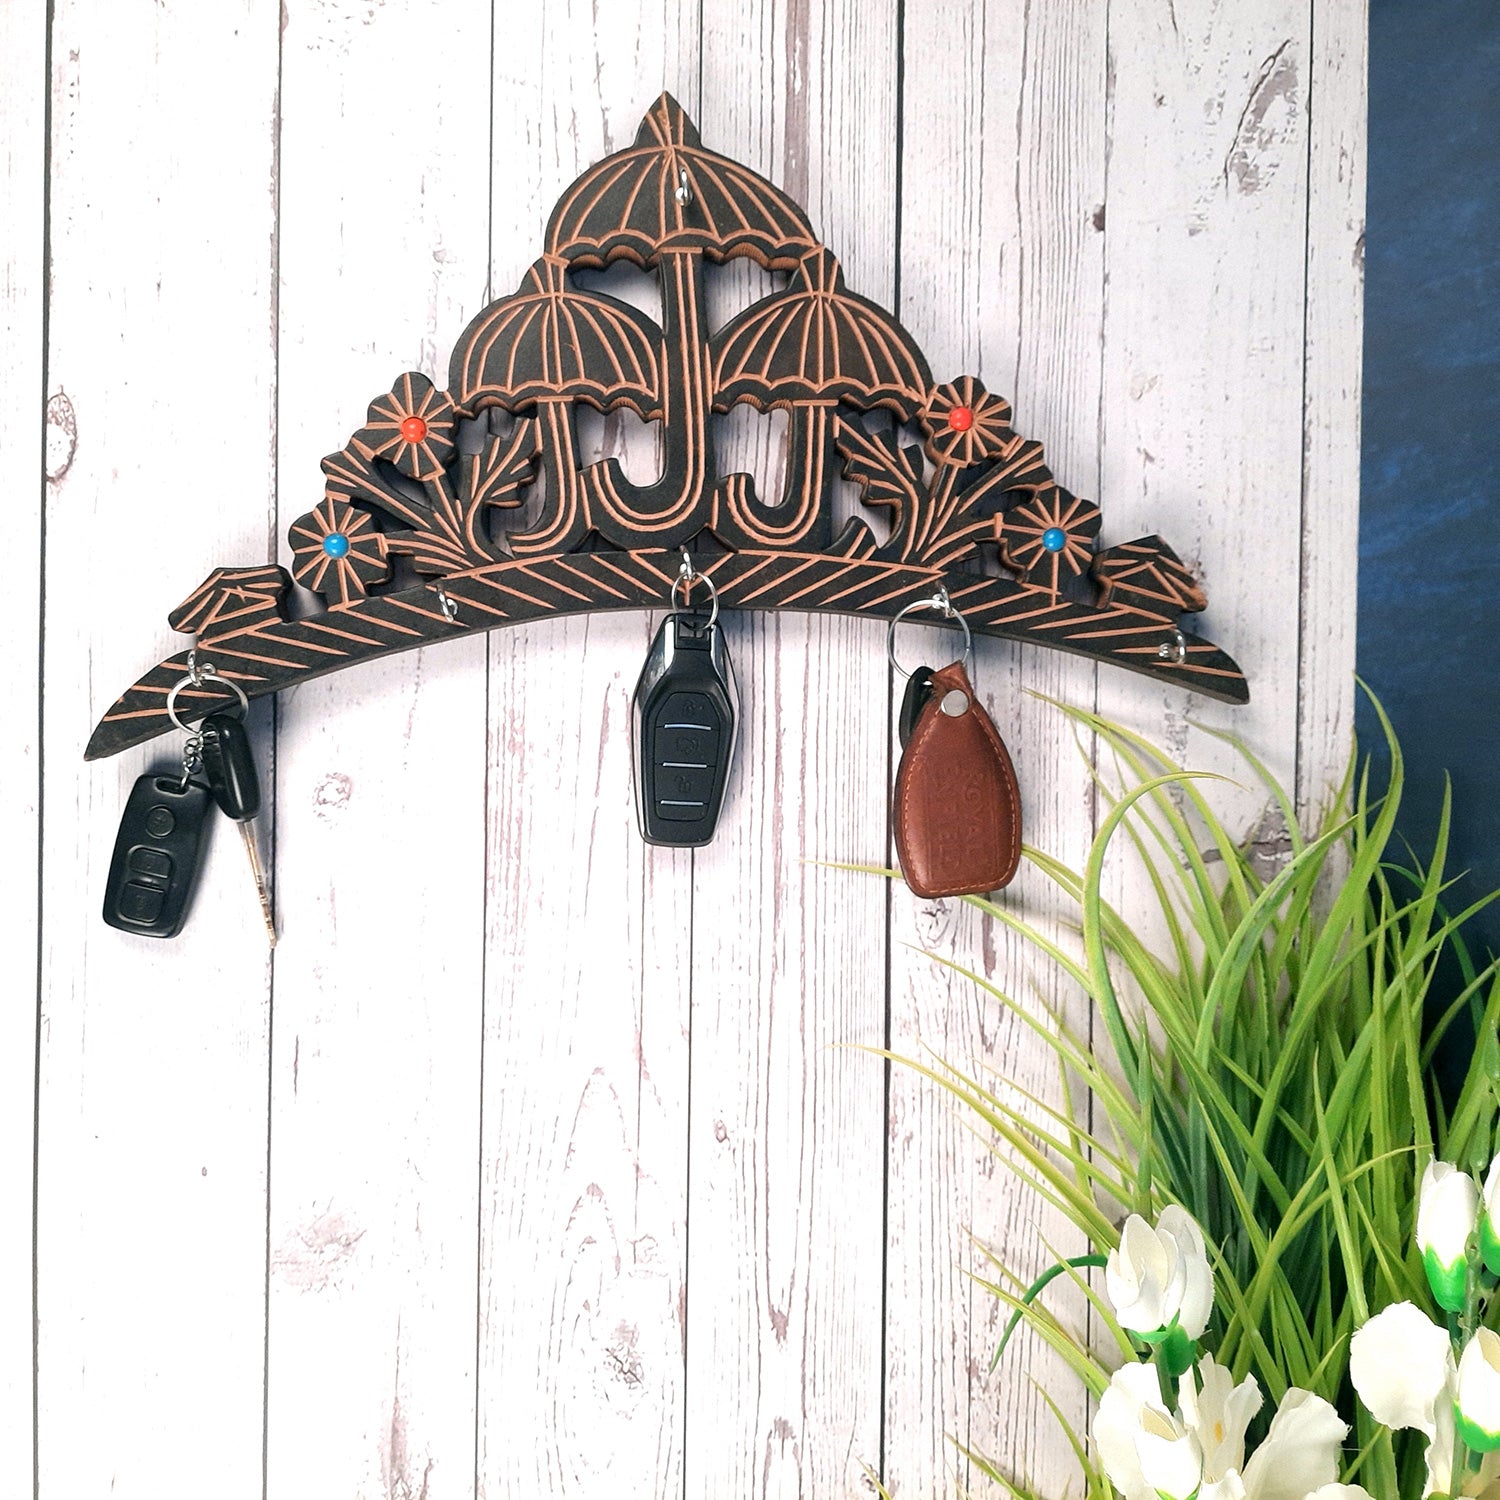 Key Holder Wall Hanging | Key Hook Stand - Umbrella Design | Wooden Keys Organizer - For Home, Entrance, Office Decor & Gifts -16 Inch (6 Hooks)